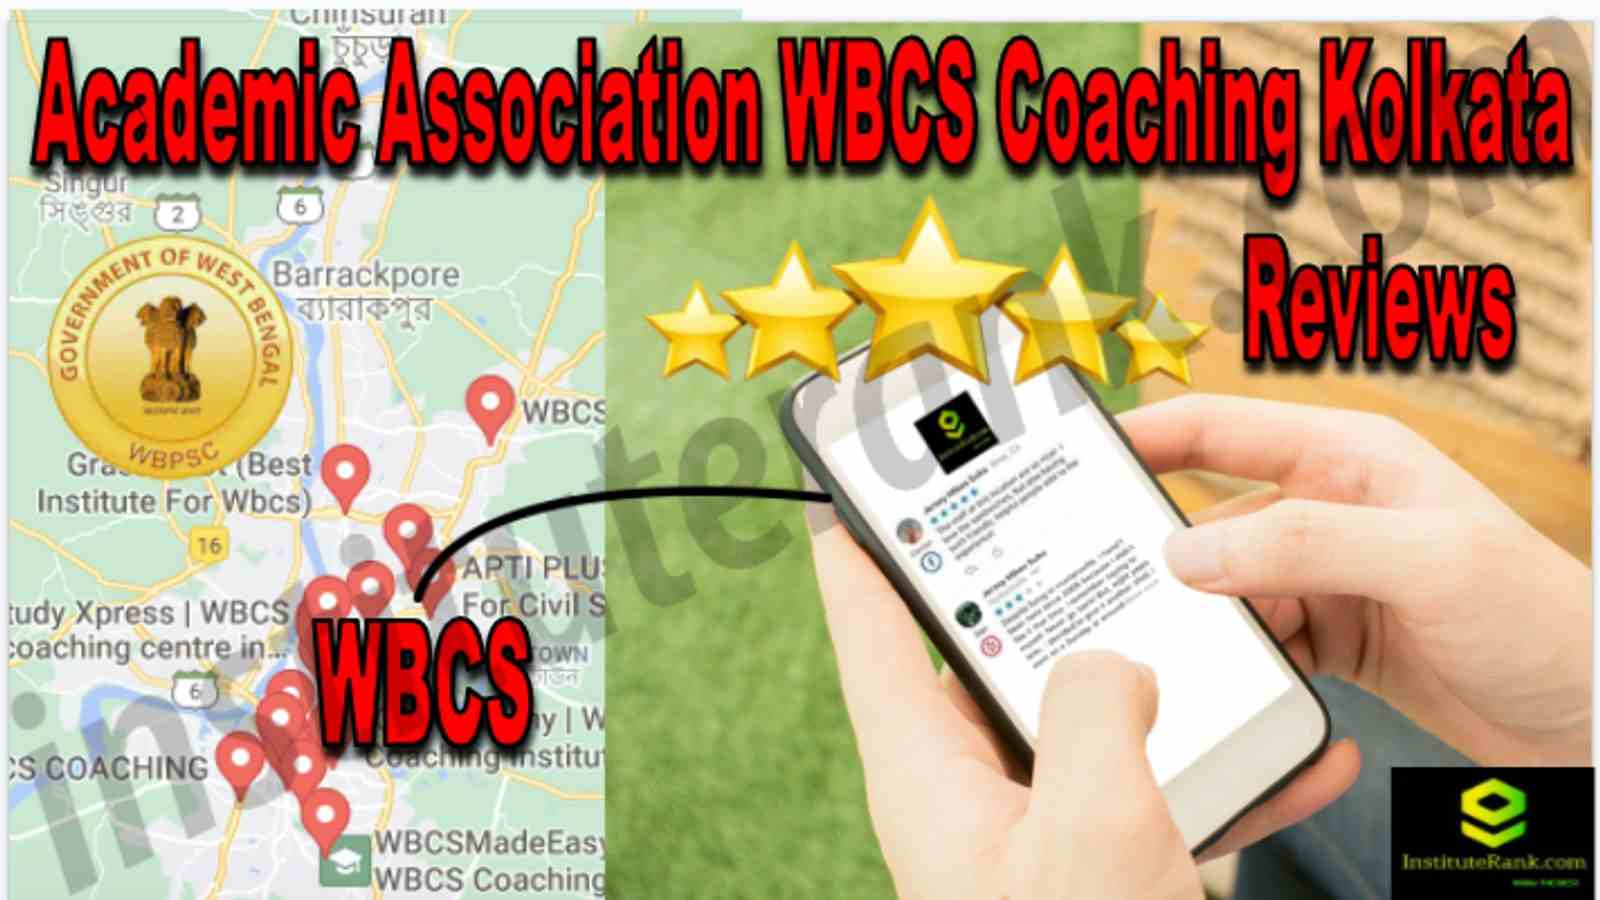 Academic Association WBSC Coaching Kolkata reviews